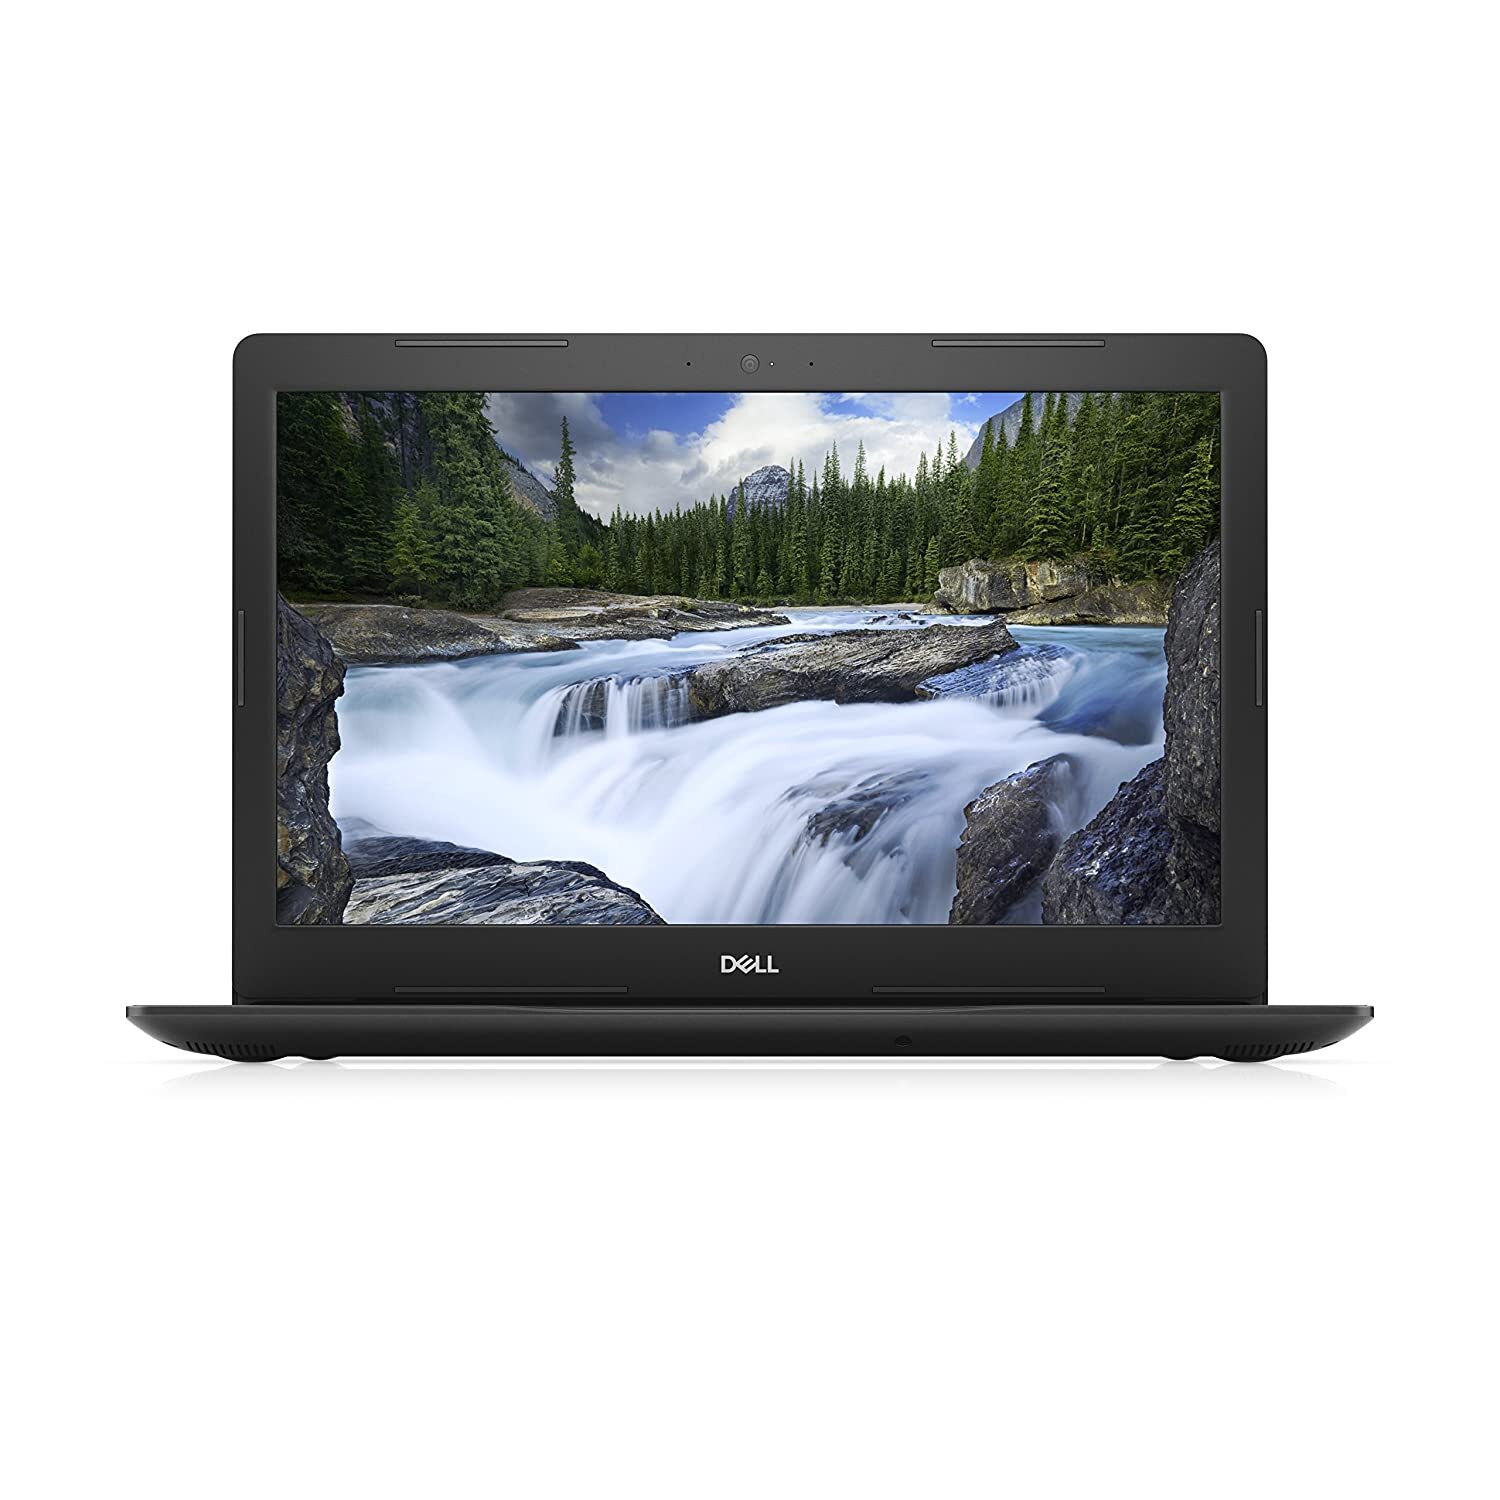 Dell Vostro 15 3590 Laptop 10th Generation Intel® Core™ i5-10210U Processor (6MB Cache, up to 4.2 GHz)1TB 5400RPM 2.5" SATA Hard Drive,4GBRAM